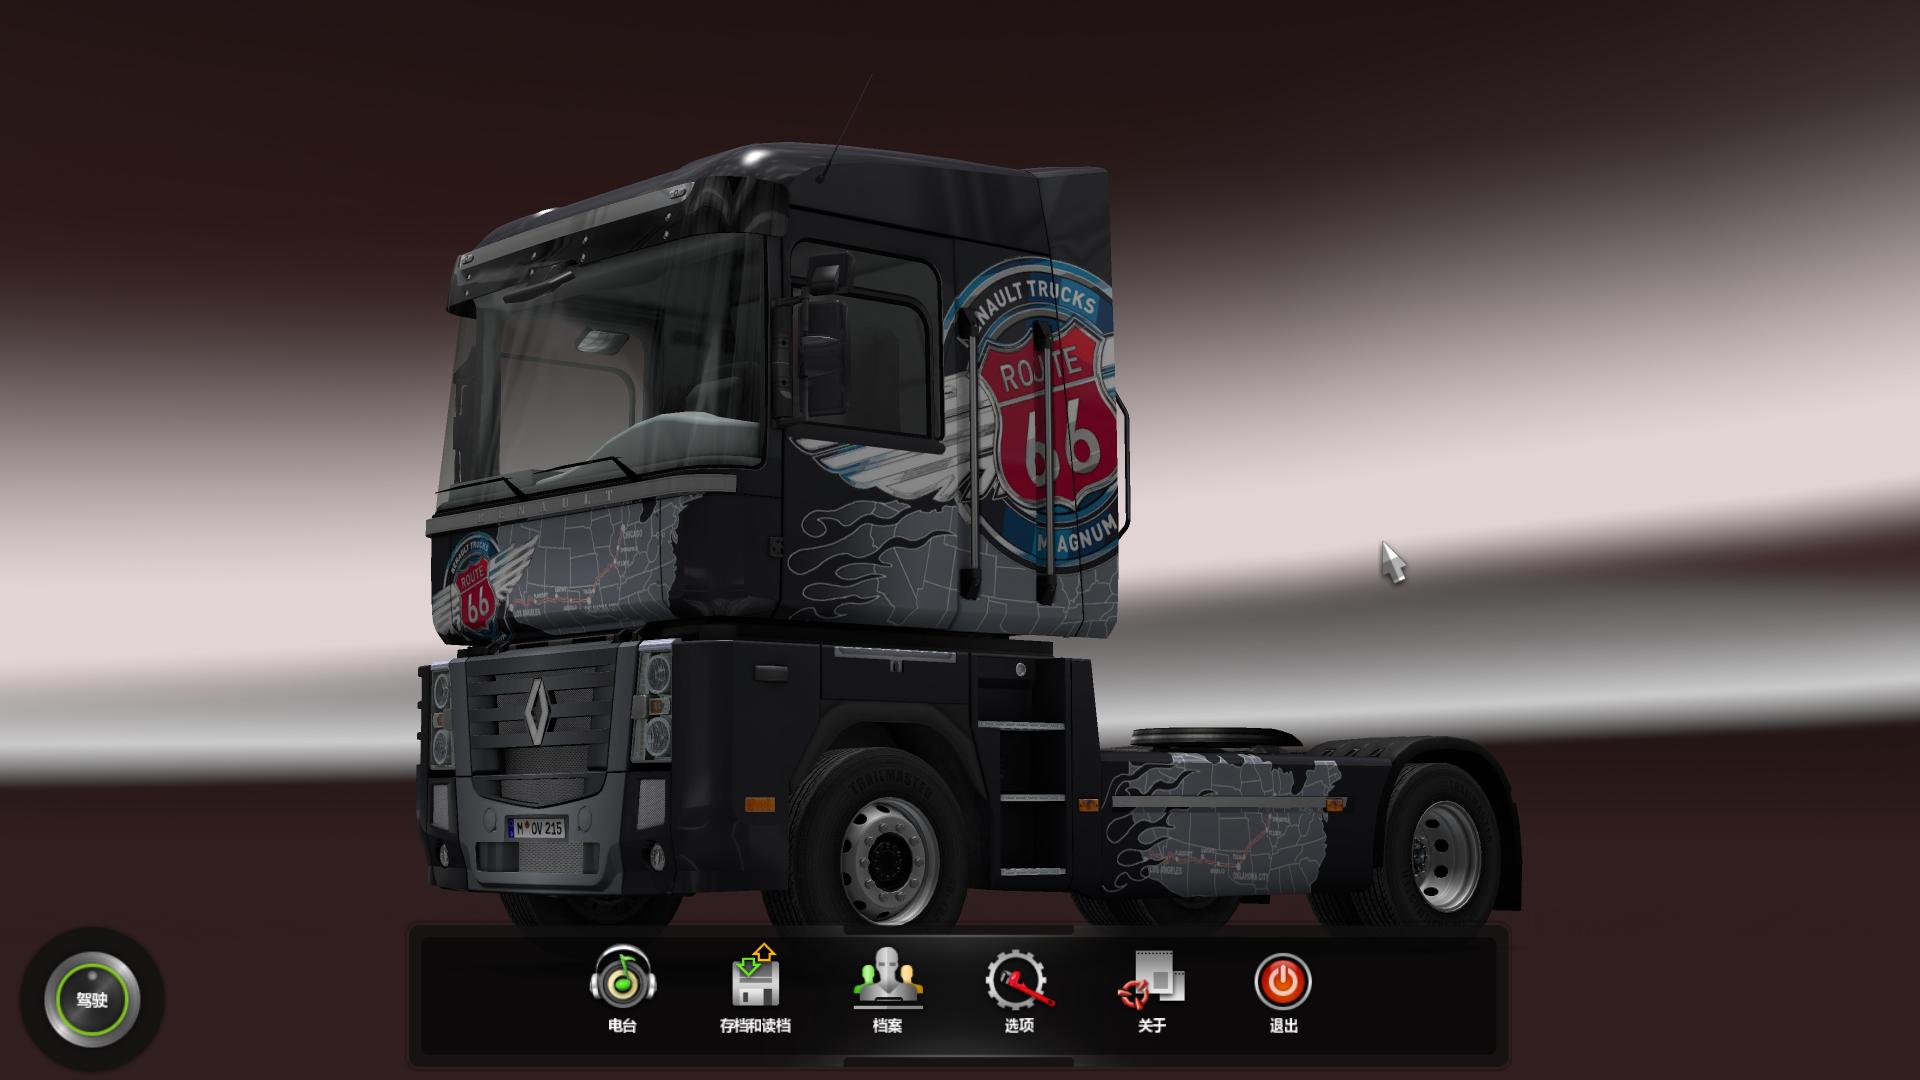 ŷ޿ģ2Euro Truck Simulator 2ŵƹЧMOD